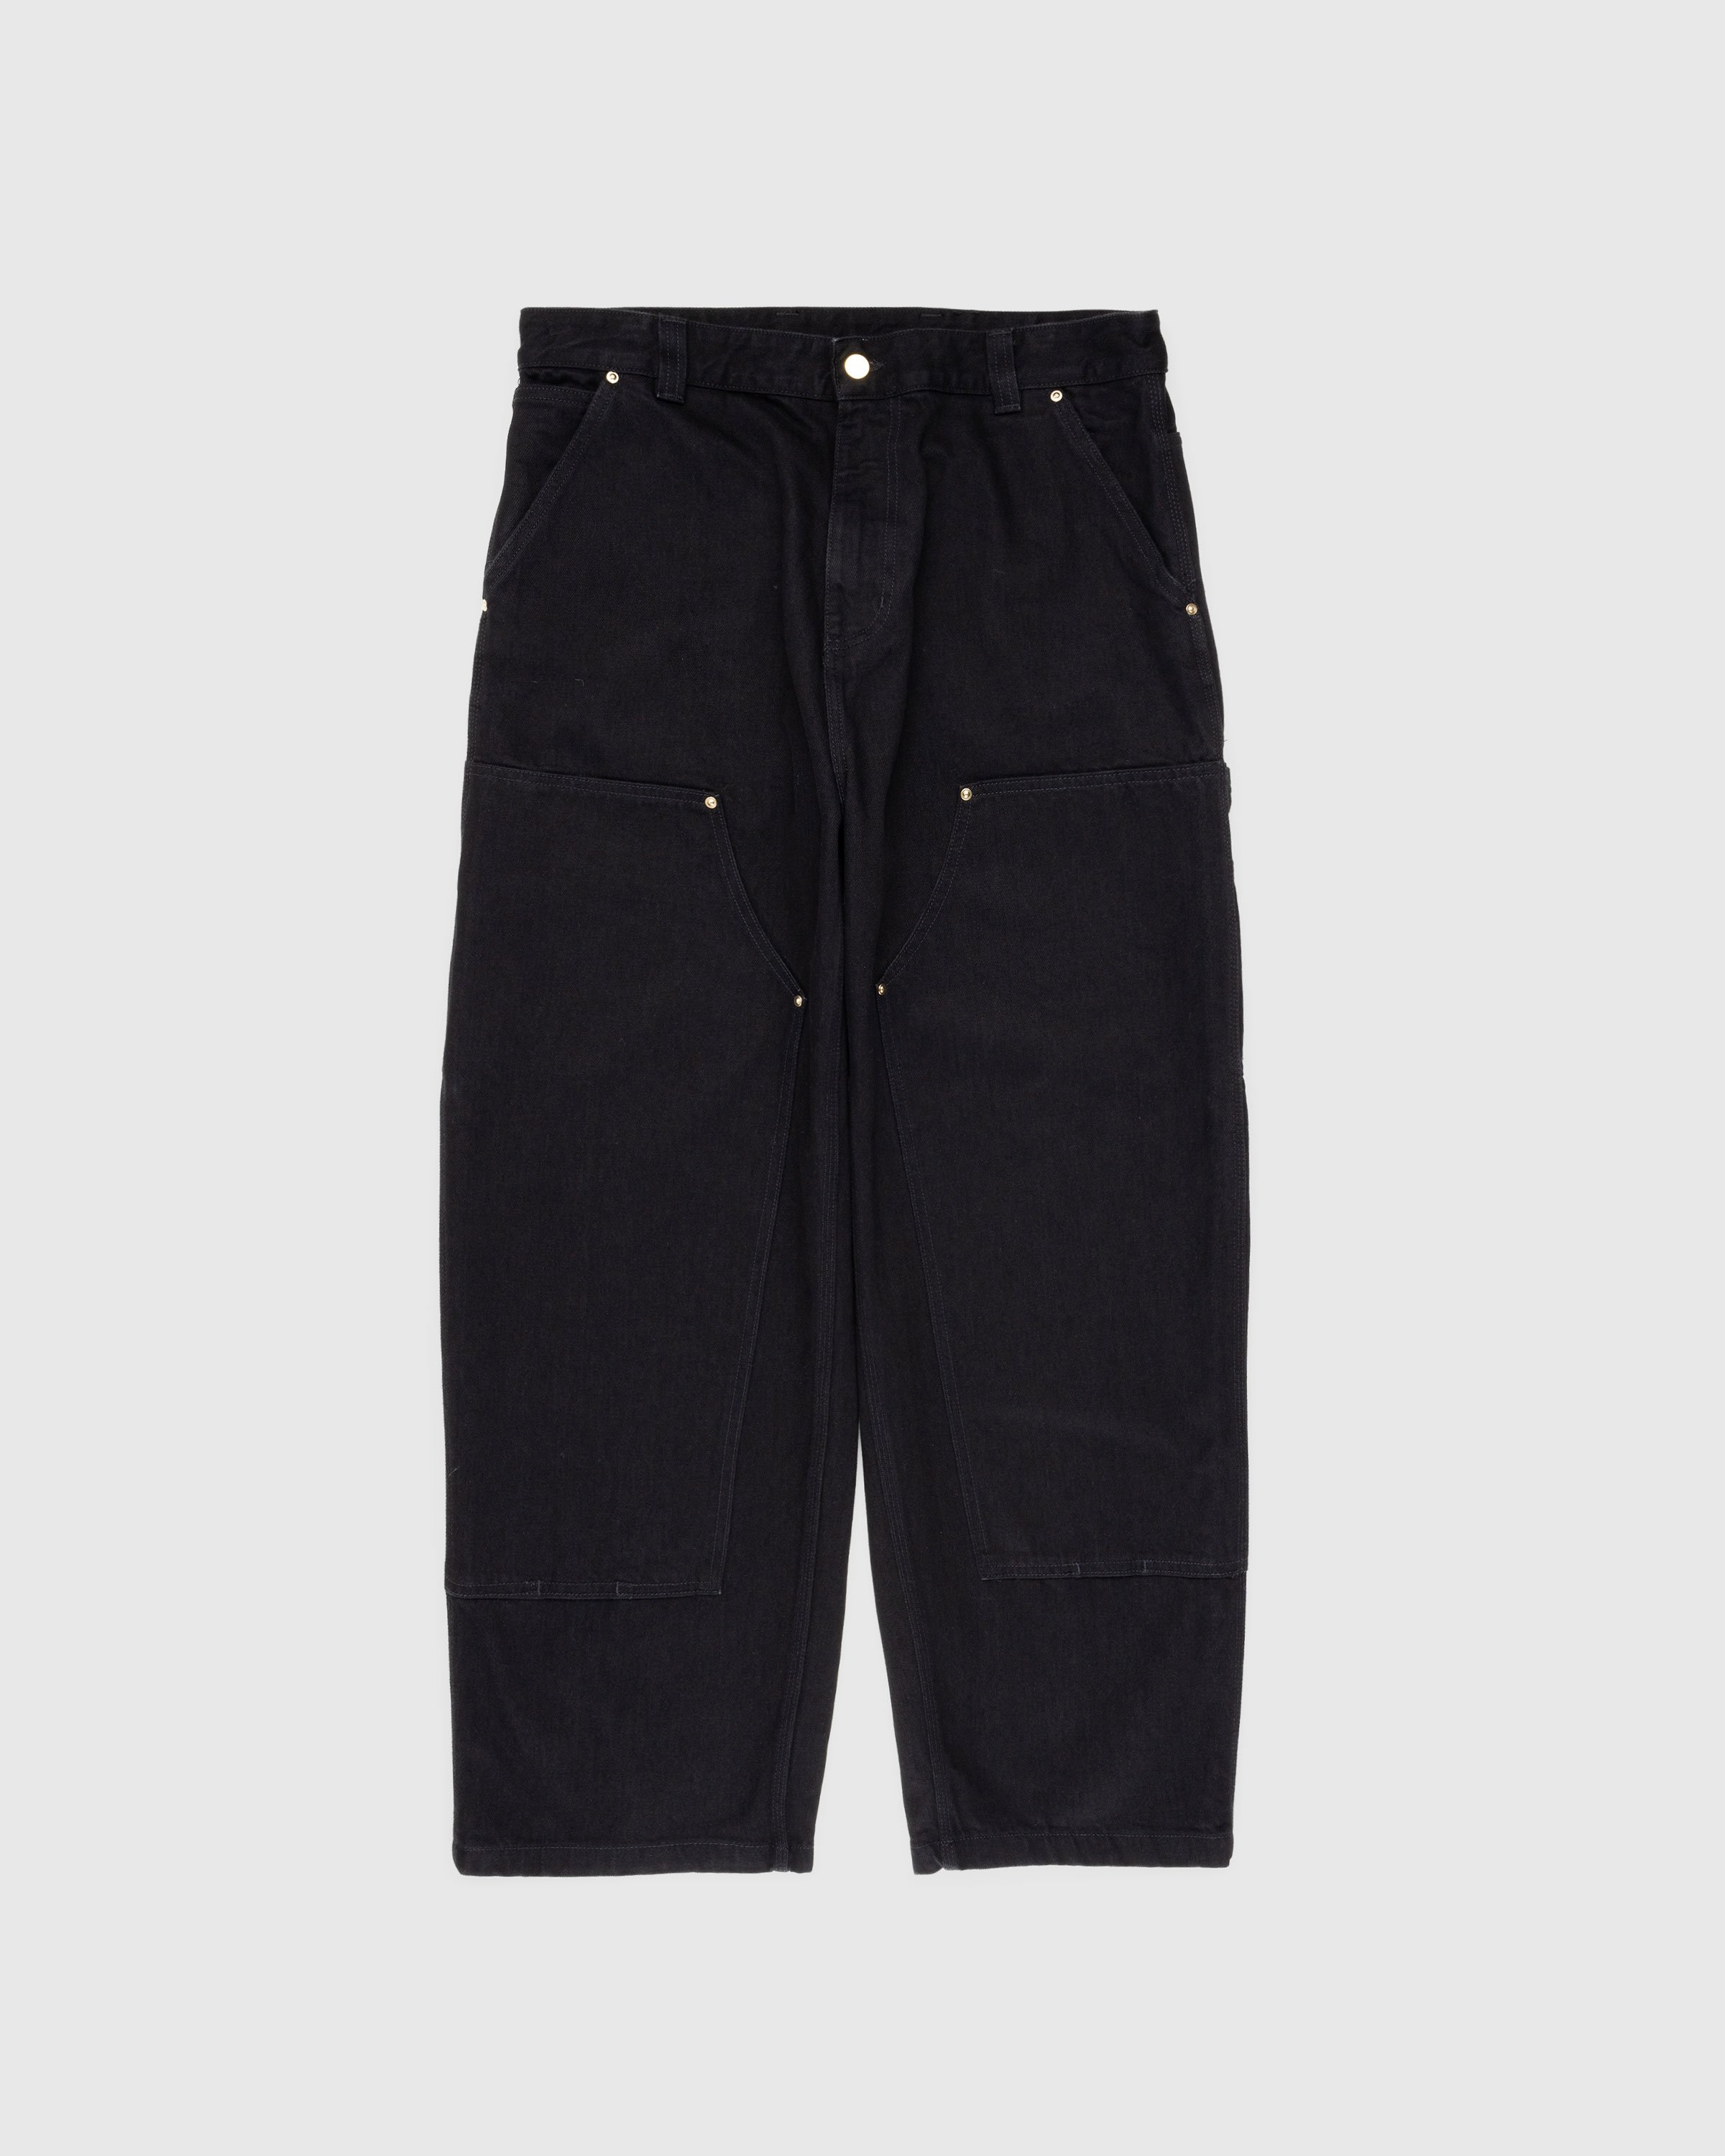 Carhartt WIP - Nash Double Knee Pant Black - Clothing - Black - Image 1